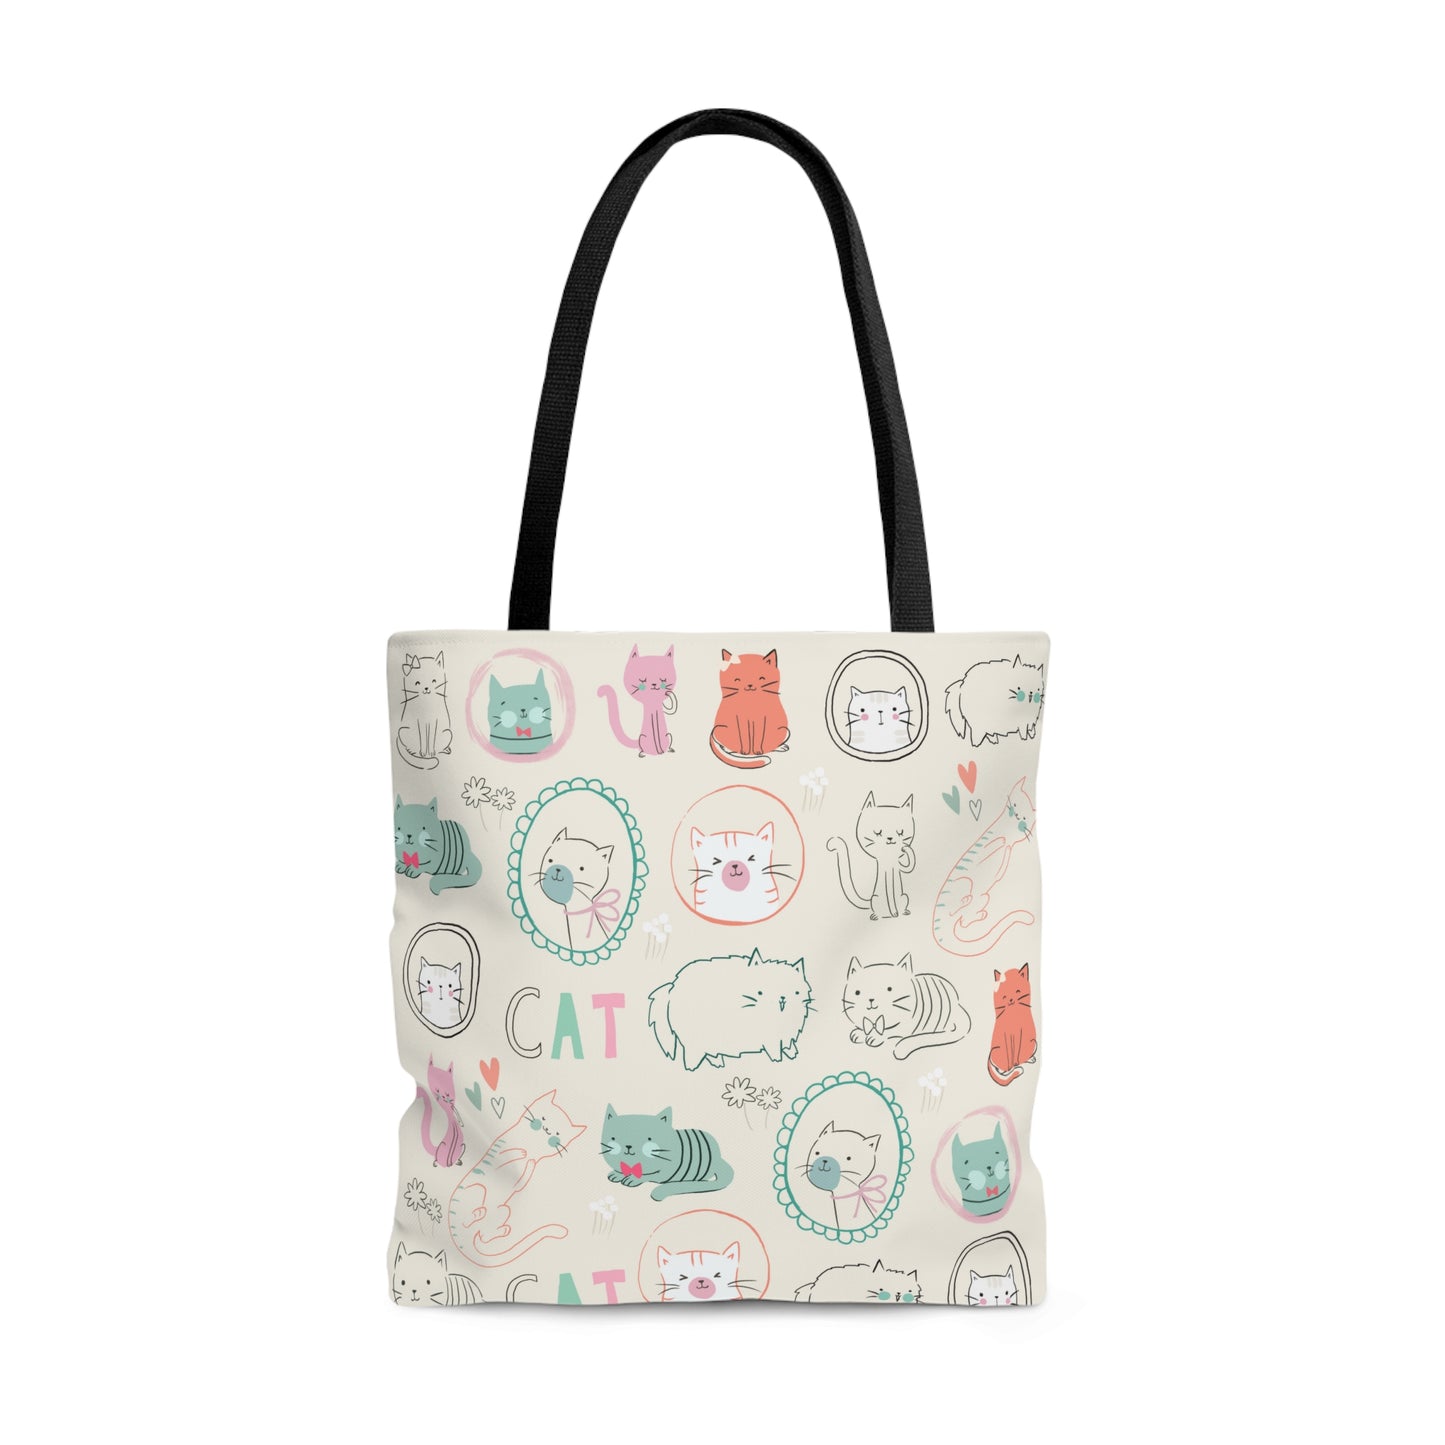 Lots of Cute Cats Design Tote Bag (AOP)